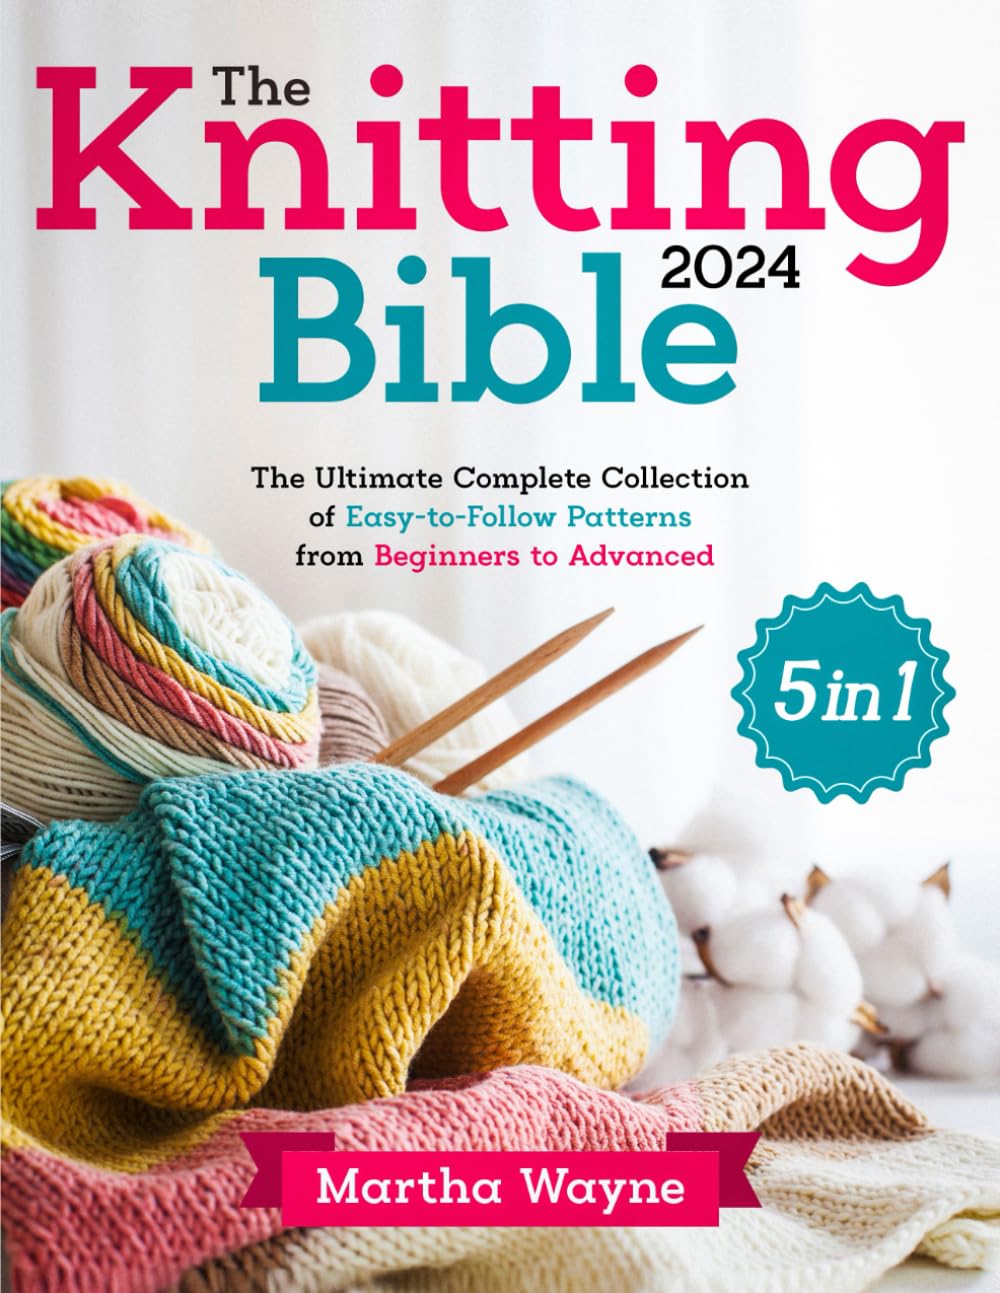 The Knitting Bible, 2024 by Martha Wayne